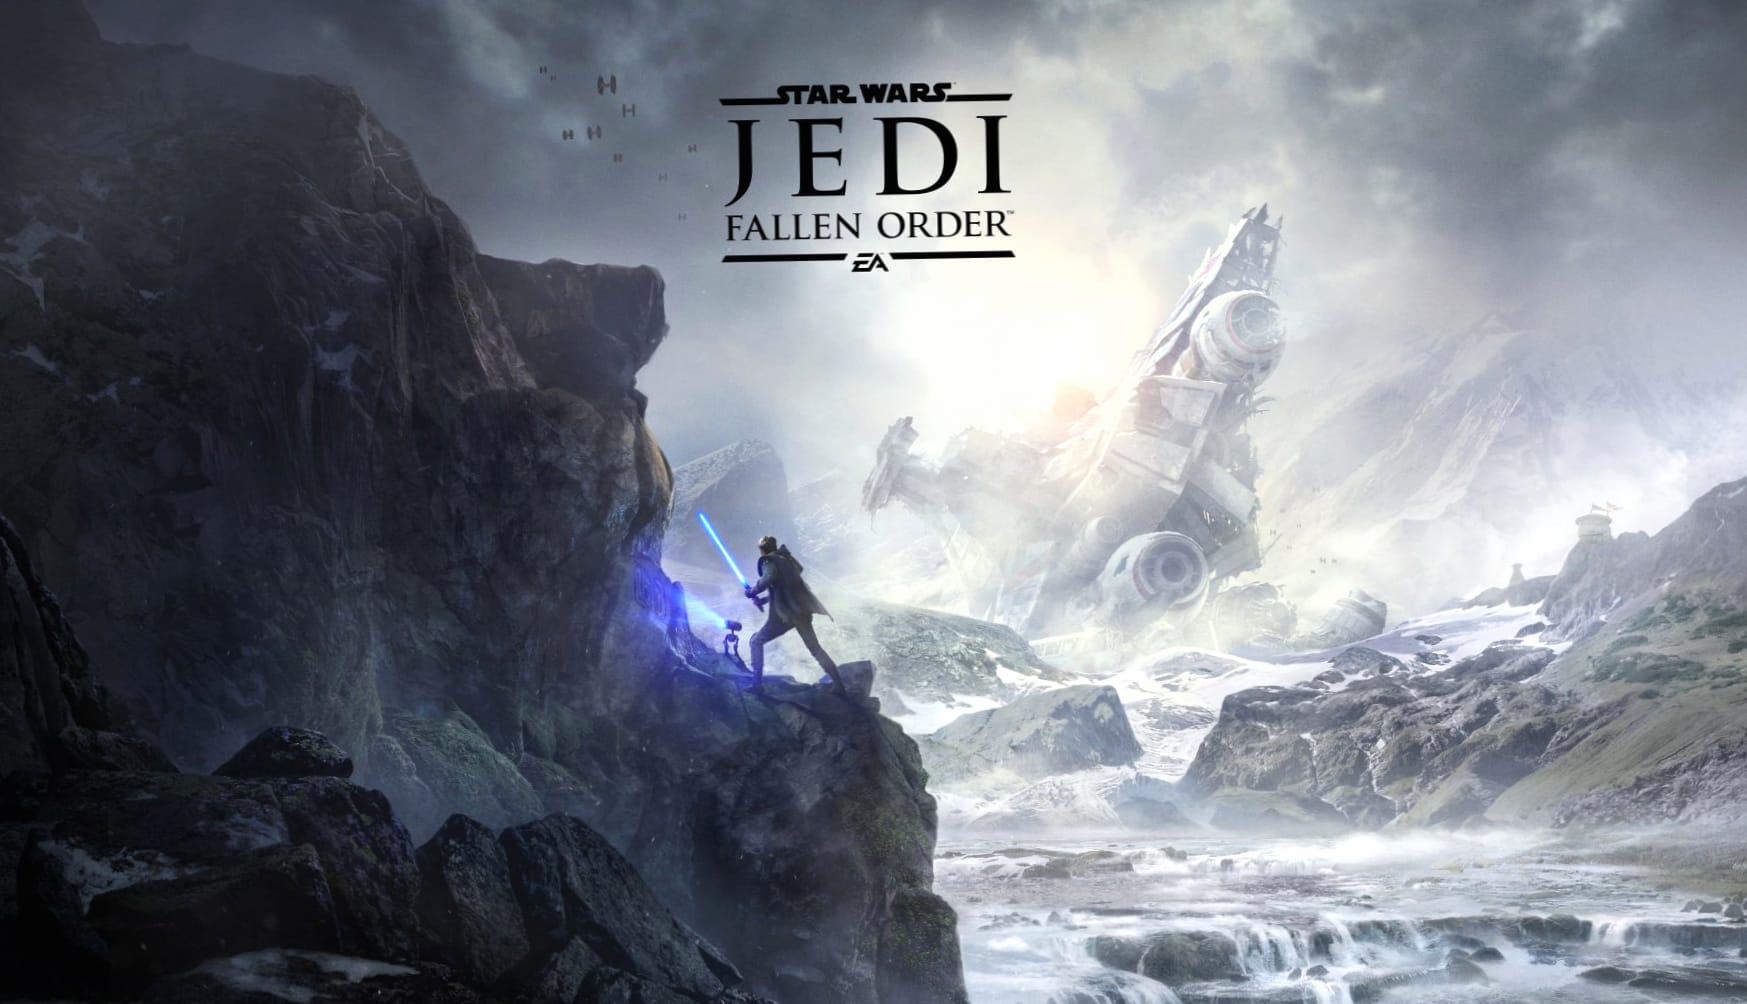 Star Wars Jedi Fallen Order at 1024 x 768 size wallpapers HD quality